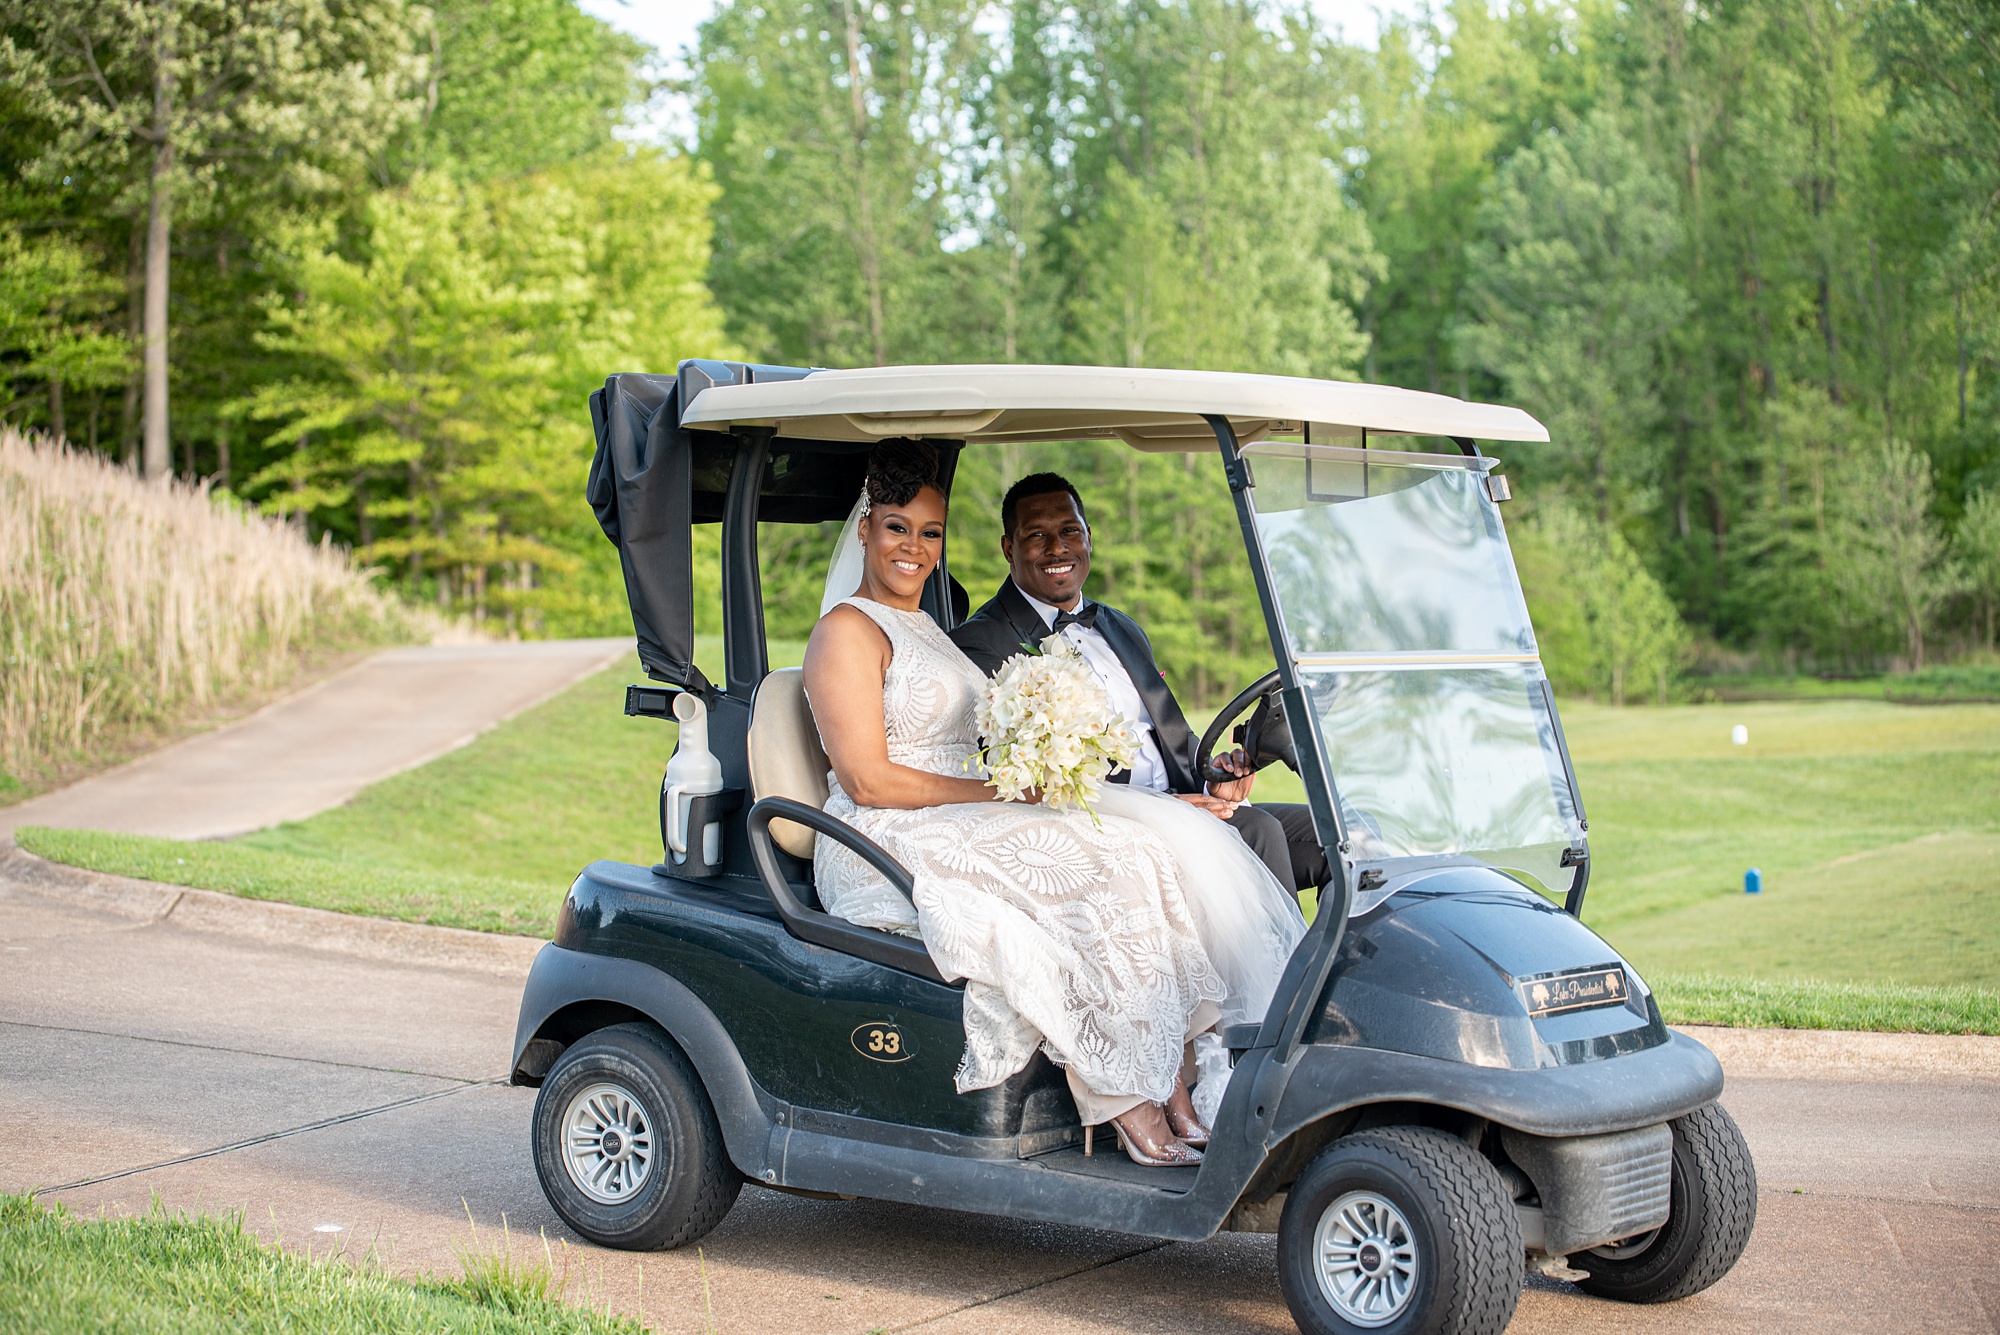 bride and groom ride on golf cart through Marlboro MD golf course 